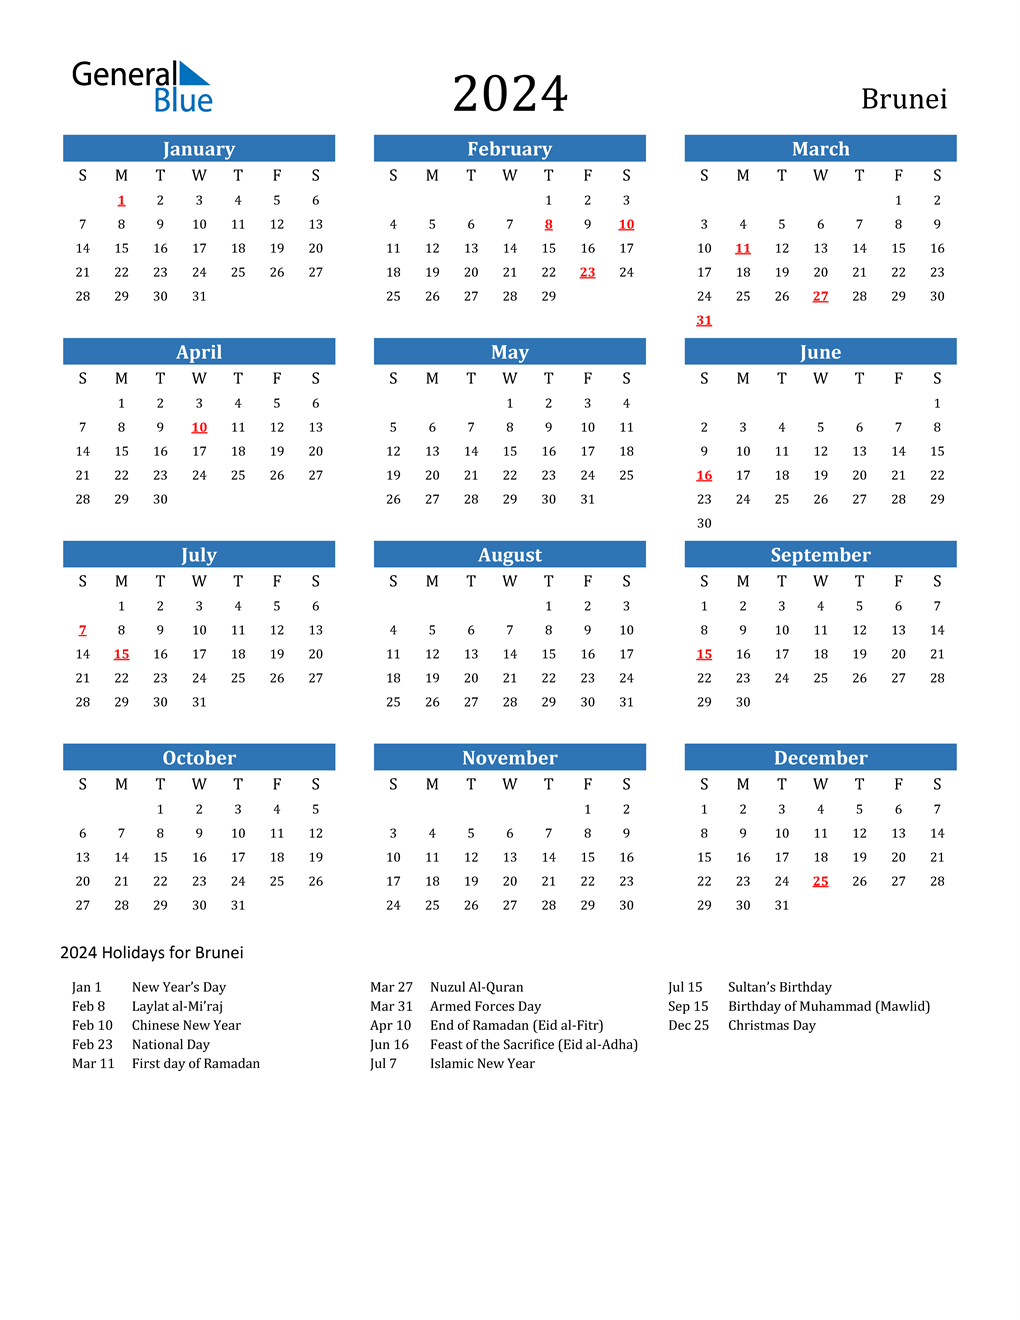 Hijrah Calendar 2024 Brunei New Latest Incredible School Calendar